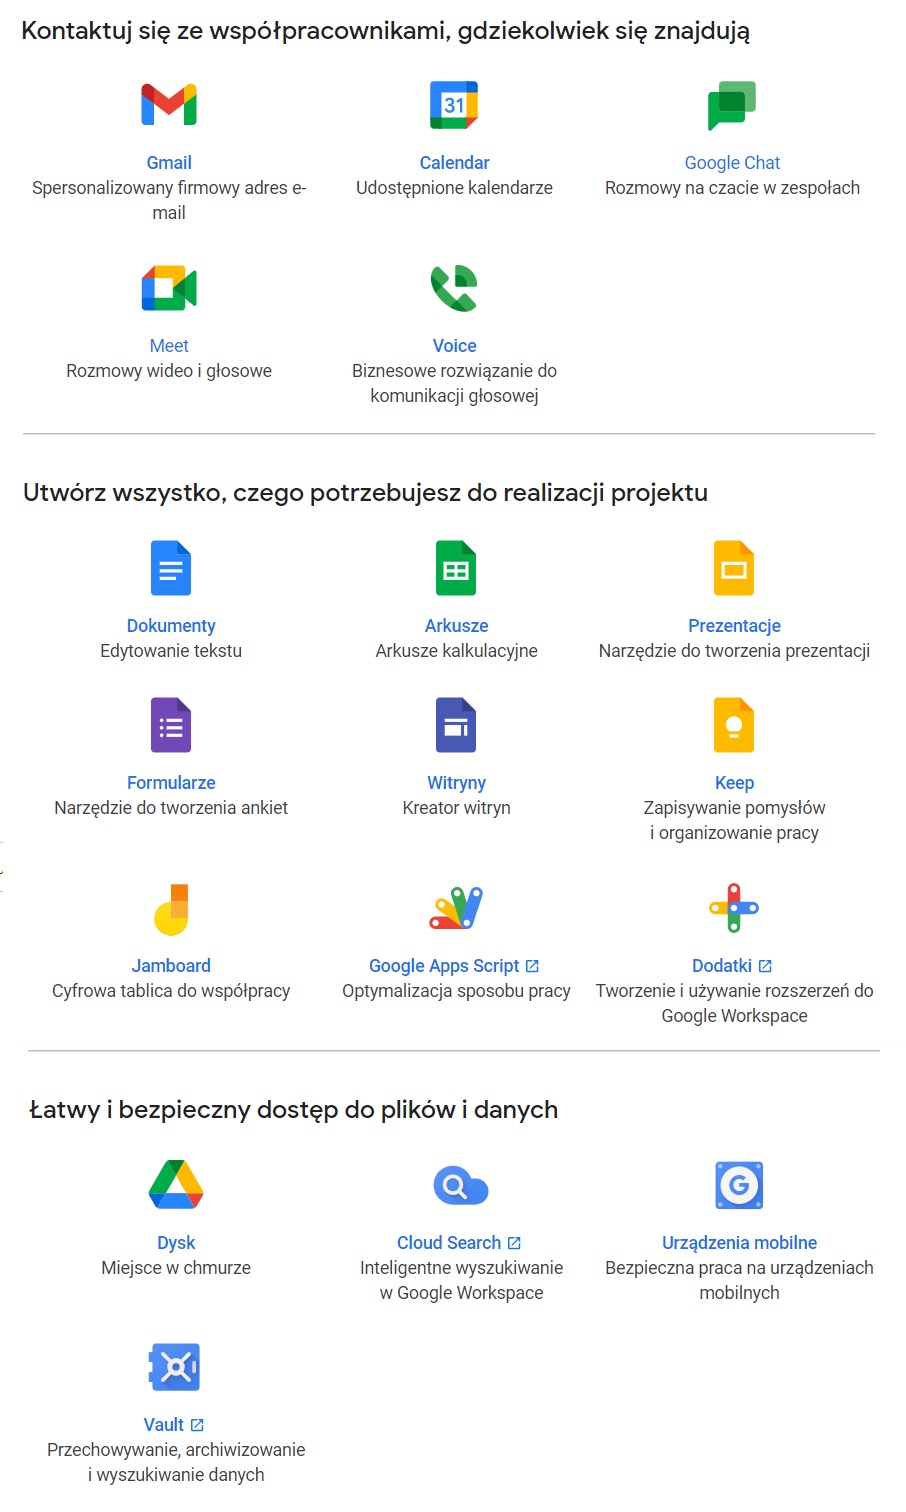 aplikacje Google Workspace - G Suite